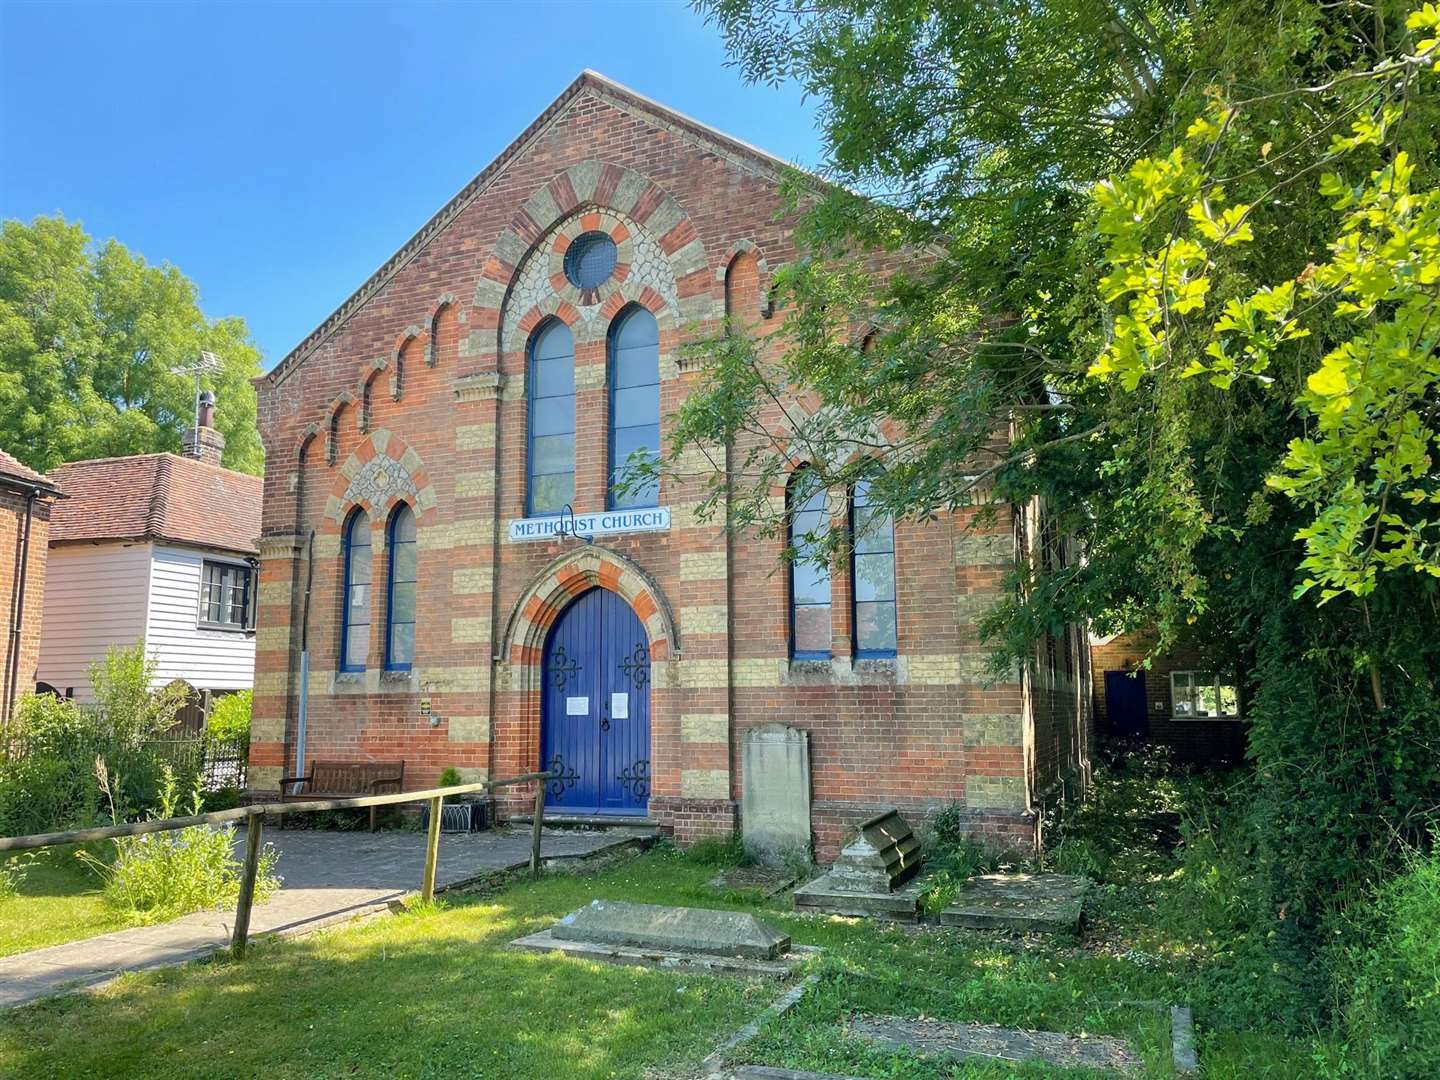 The Headcorn Methodist Church, now empty